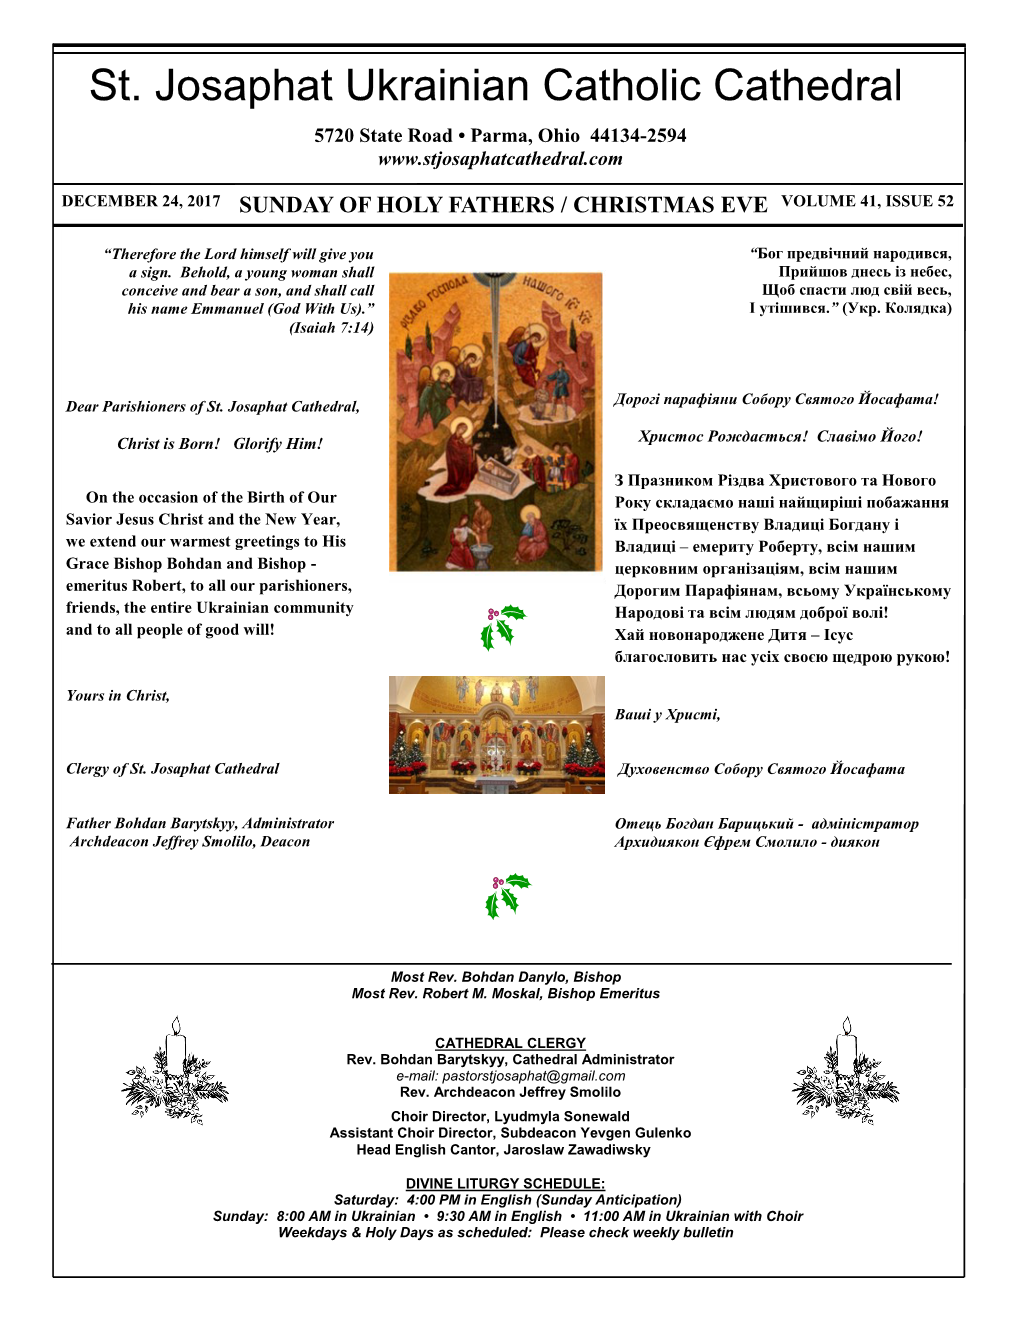 Sunday of Holy Fathers / Christmas Eve Volume 41, Issue 52